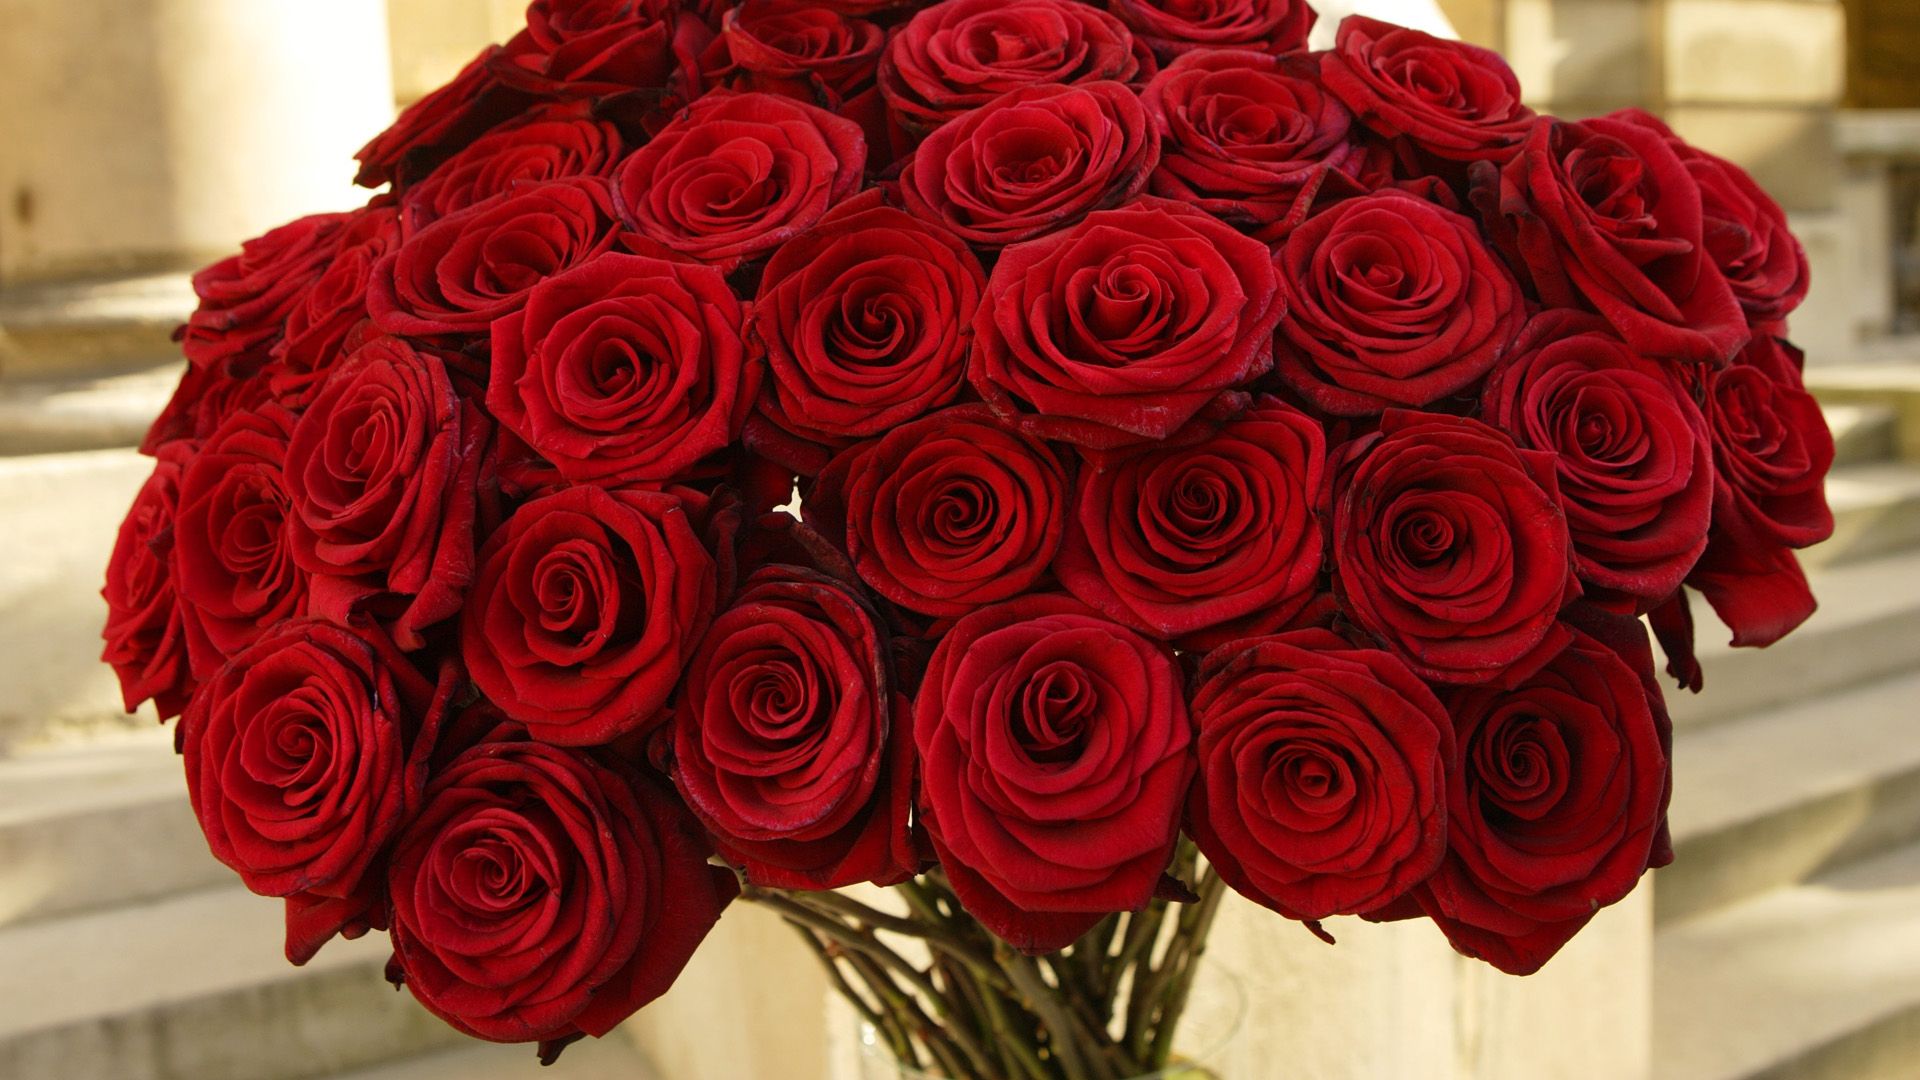 valentine day wallpaper download,flower,rose,garden roses,bouquet,red